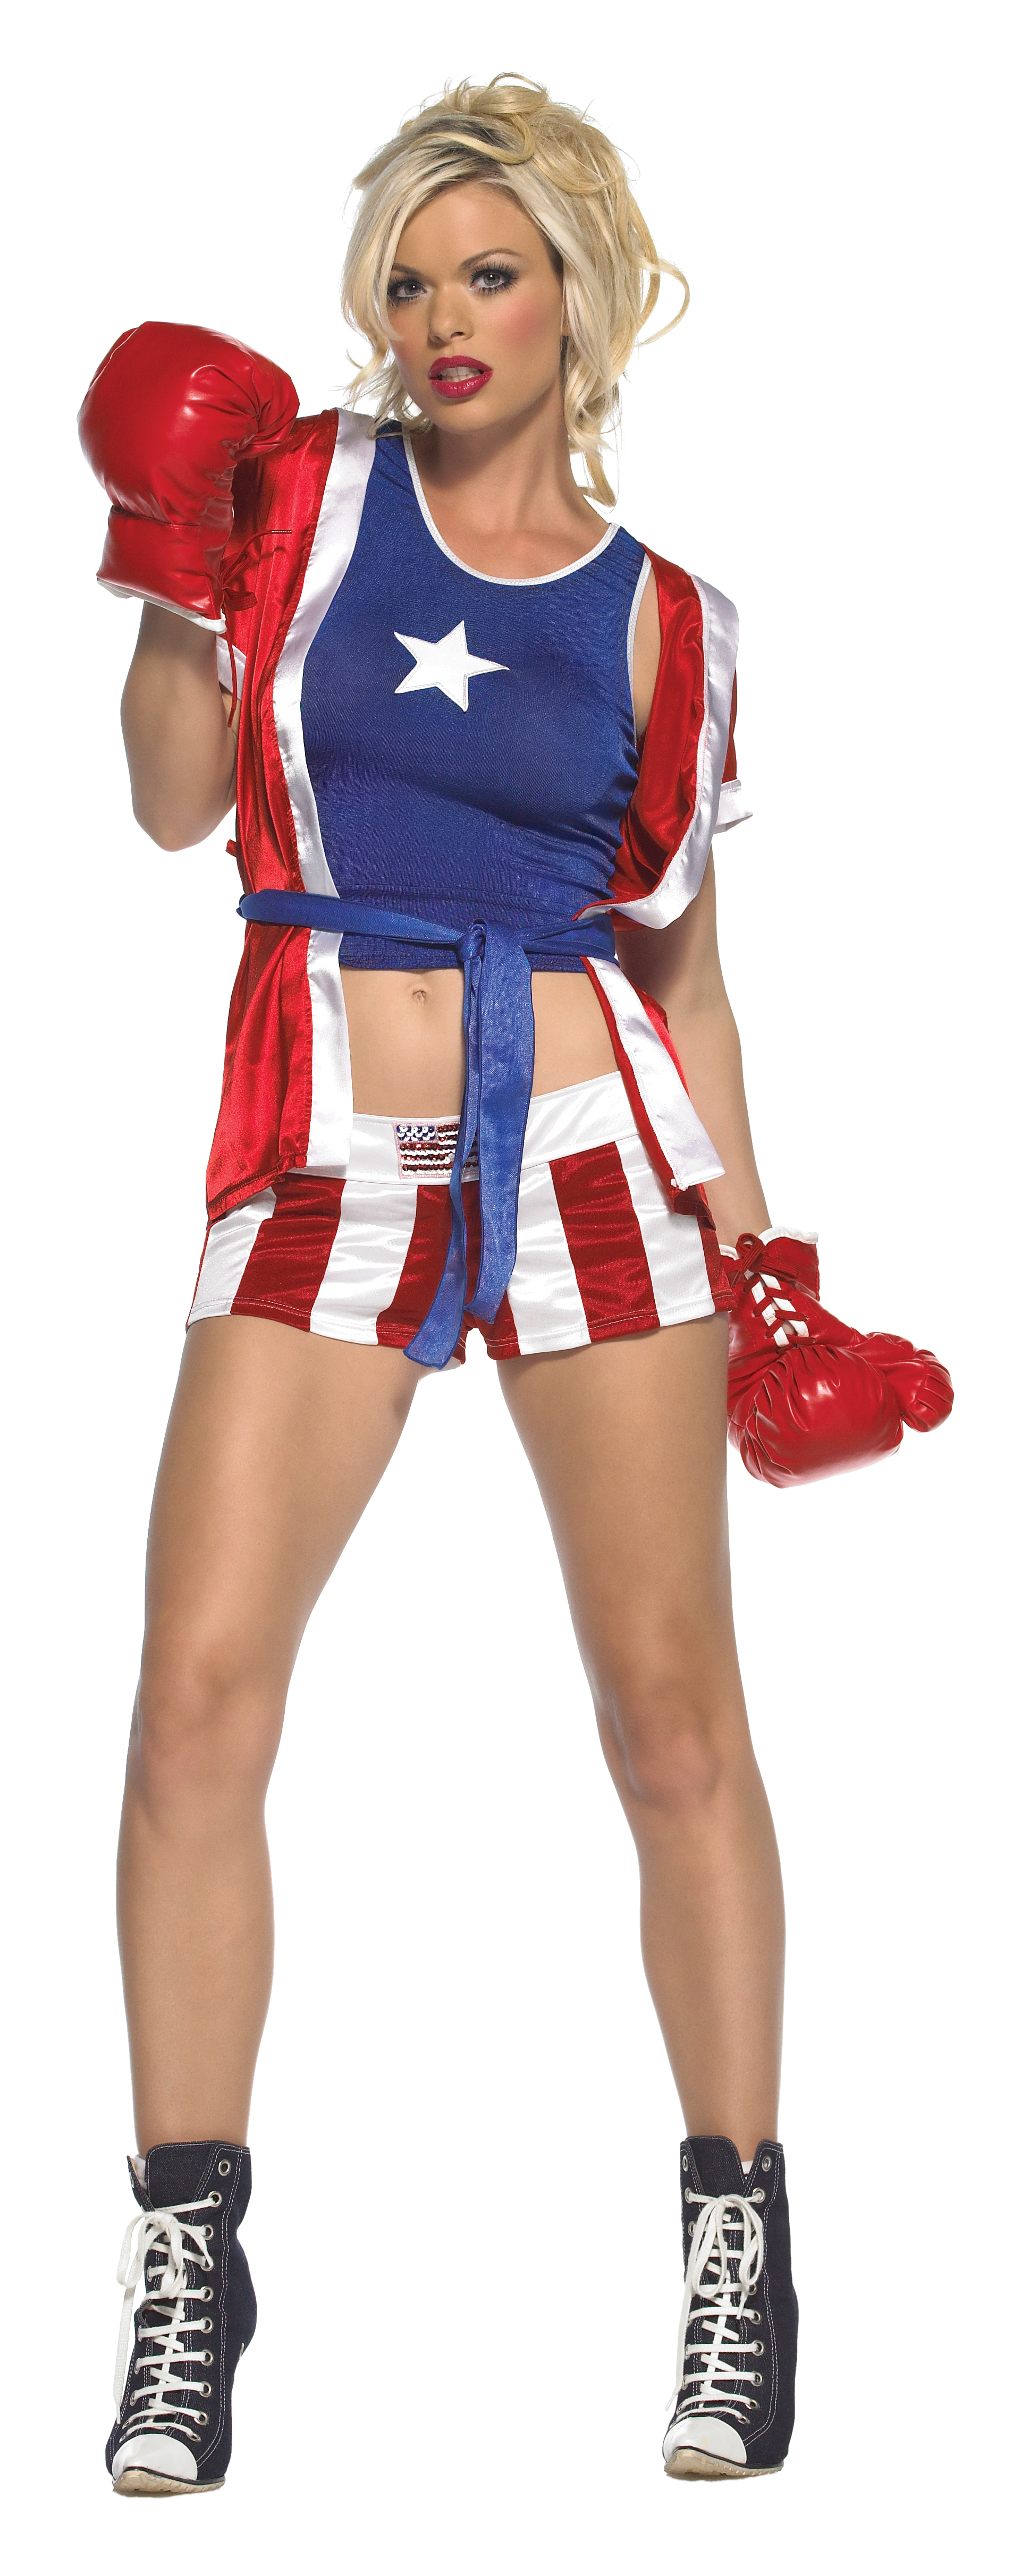 Leg Avenue Women's Knock Out Champ Adult Costume - Medium/Large